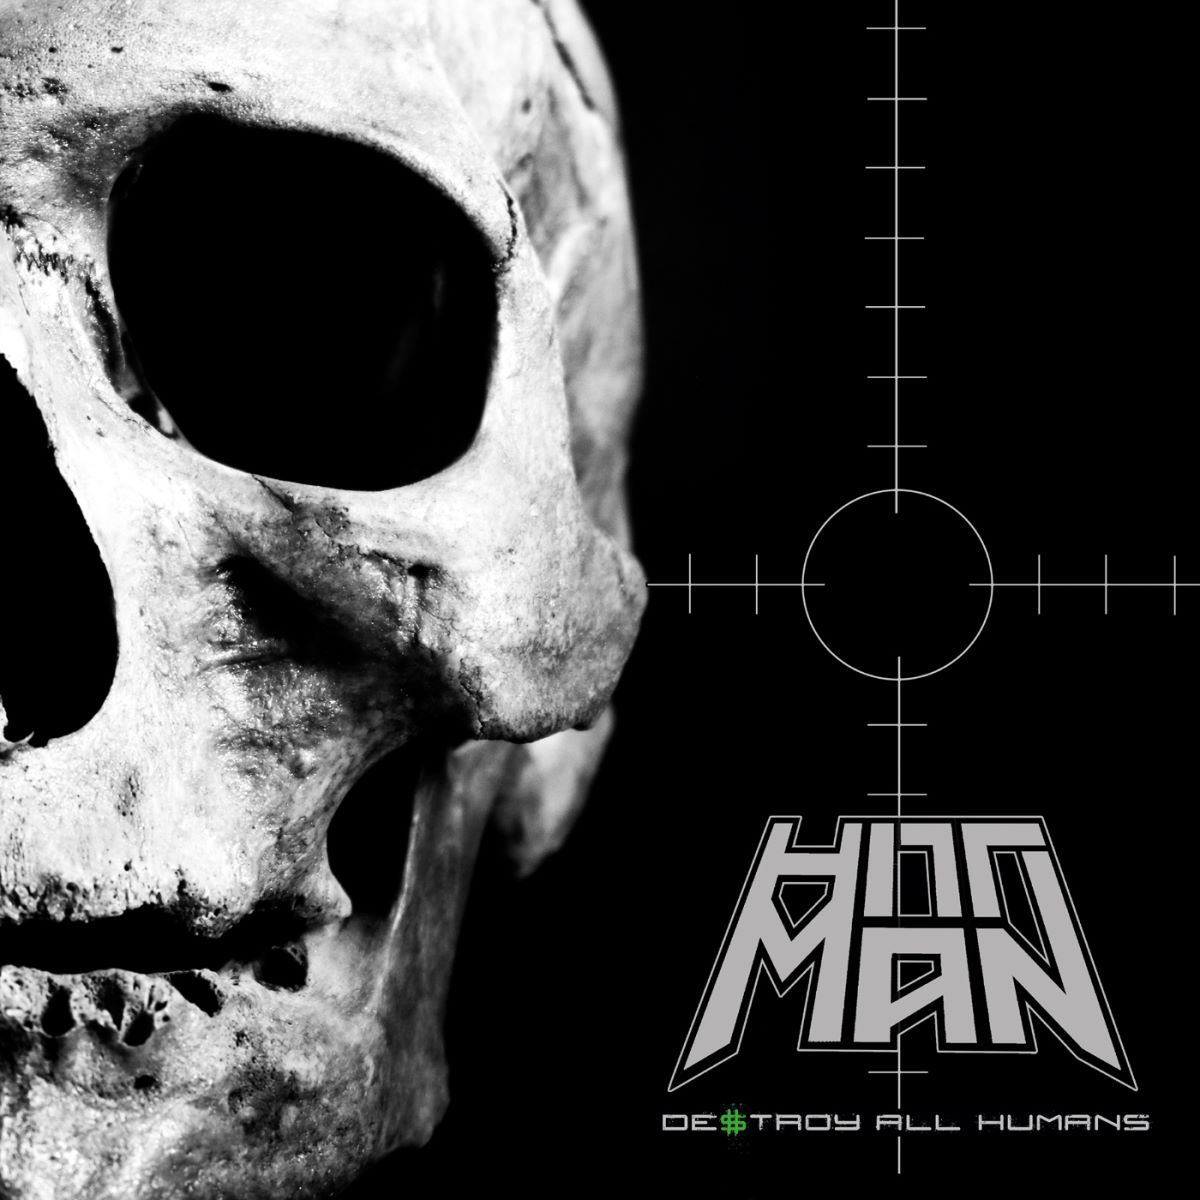 Hittman – Destroy All Humans - album cover